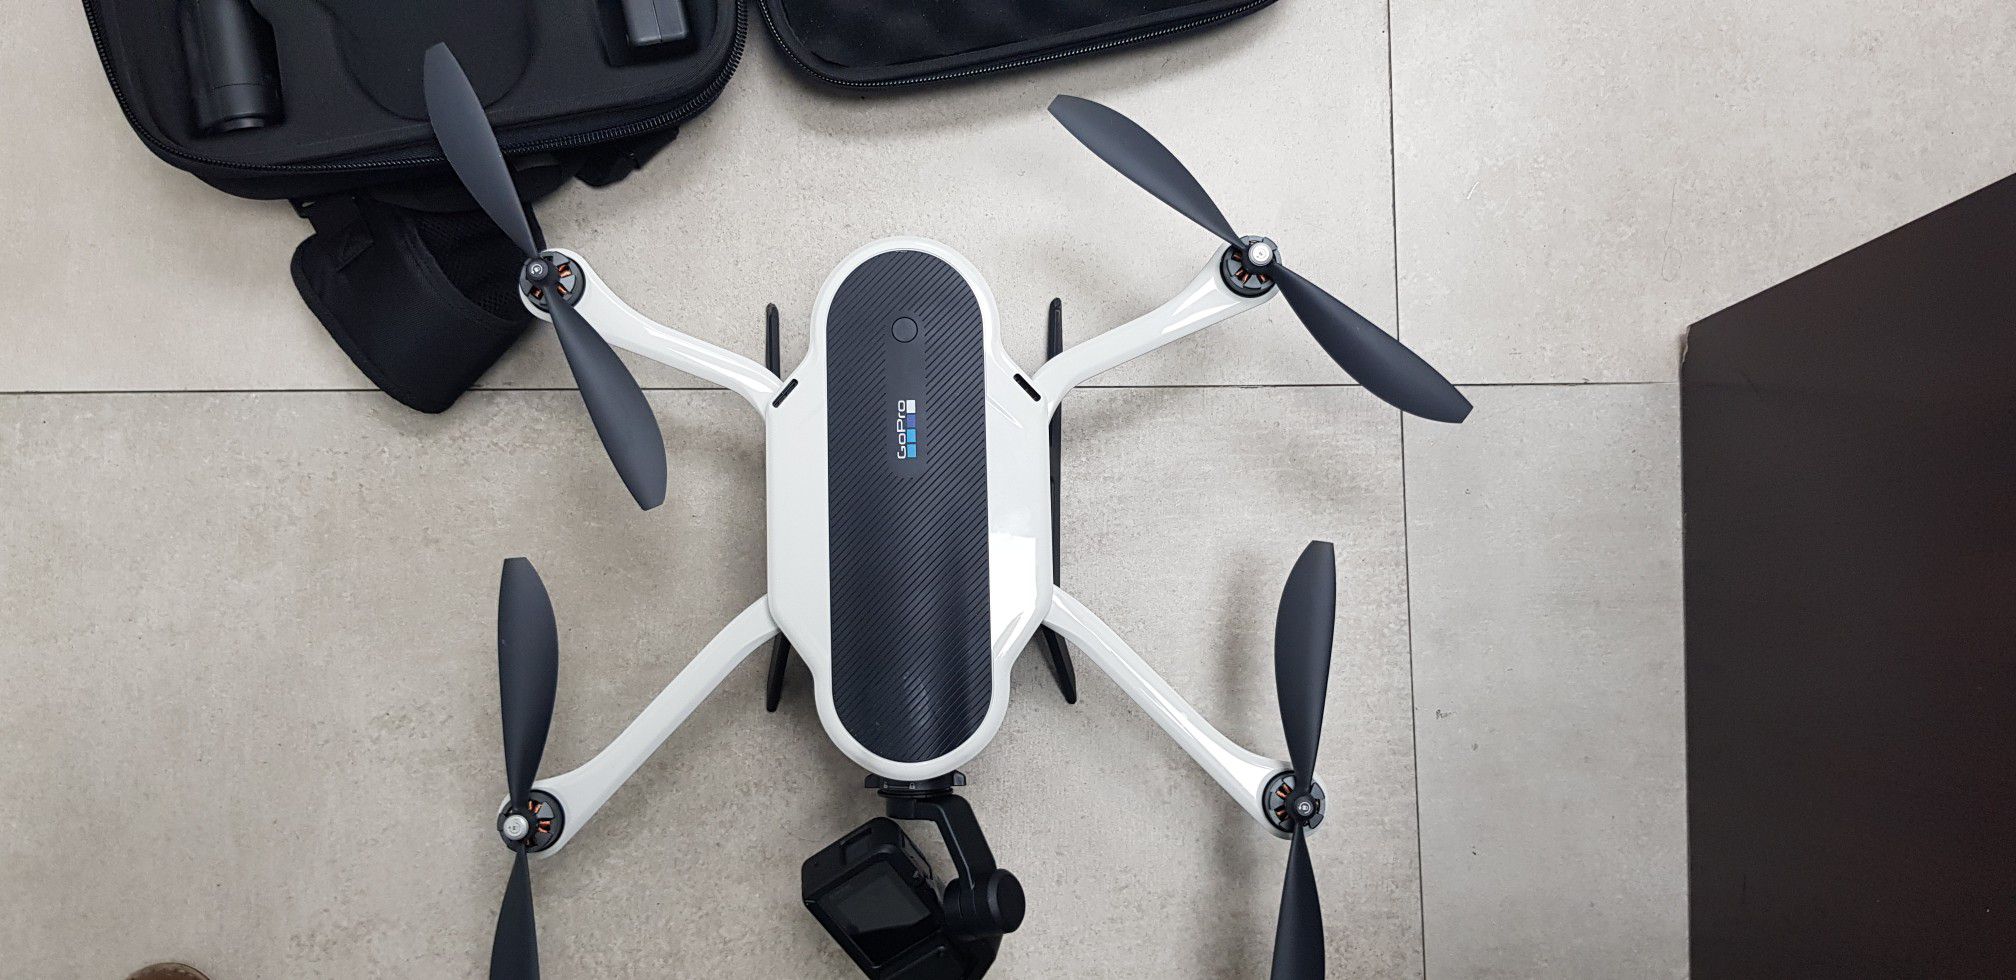 GoPro Karma Drone with Hero5 Camera